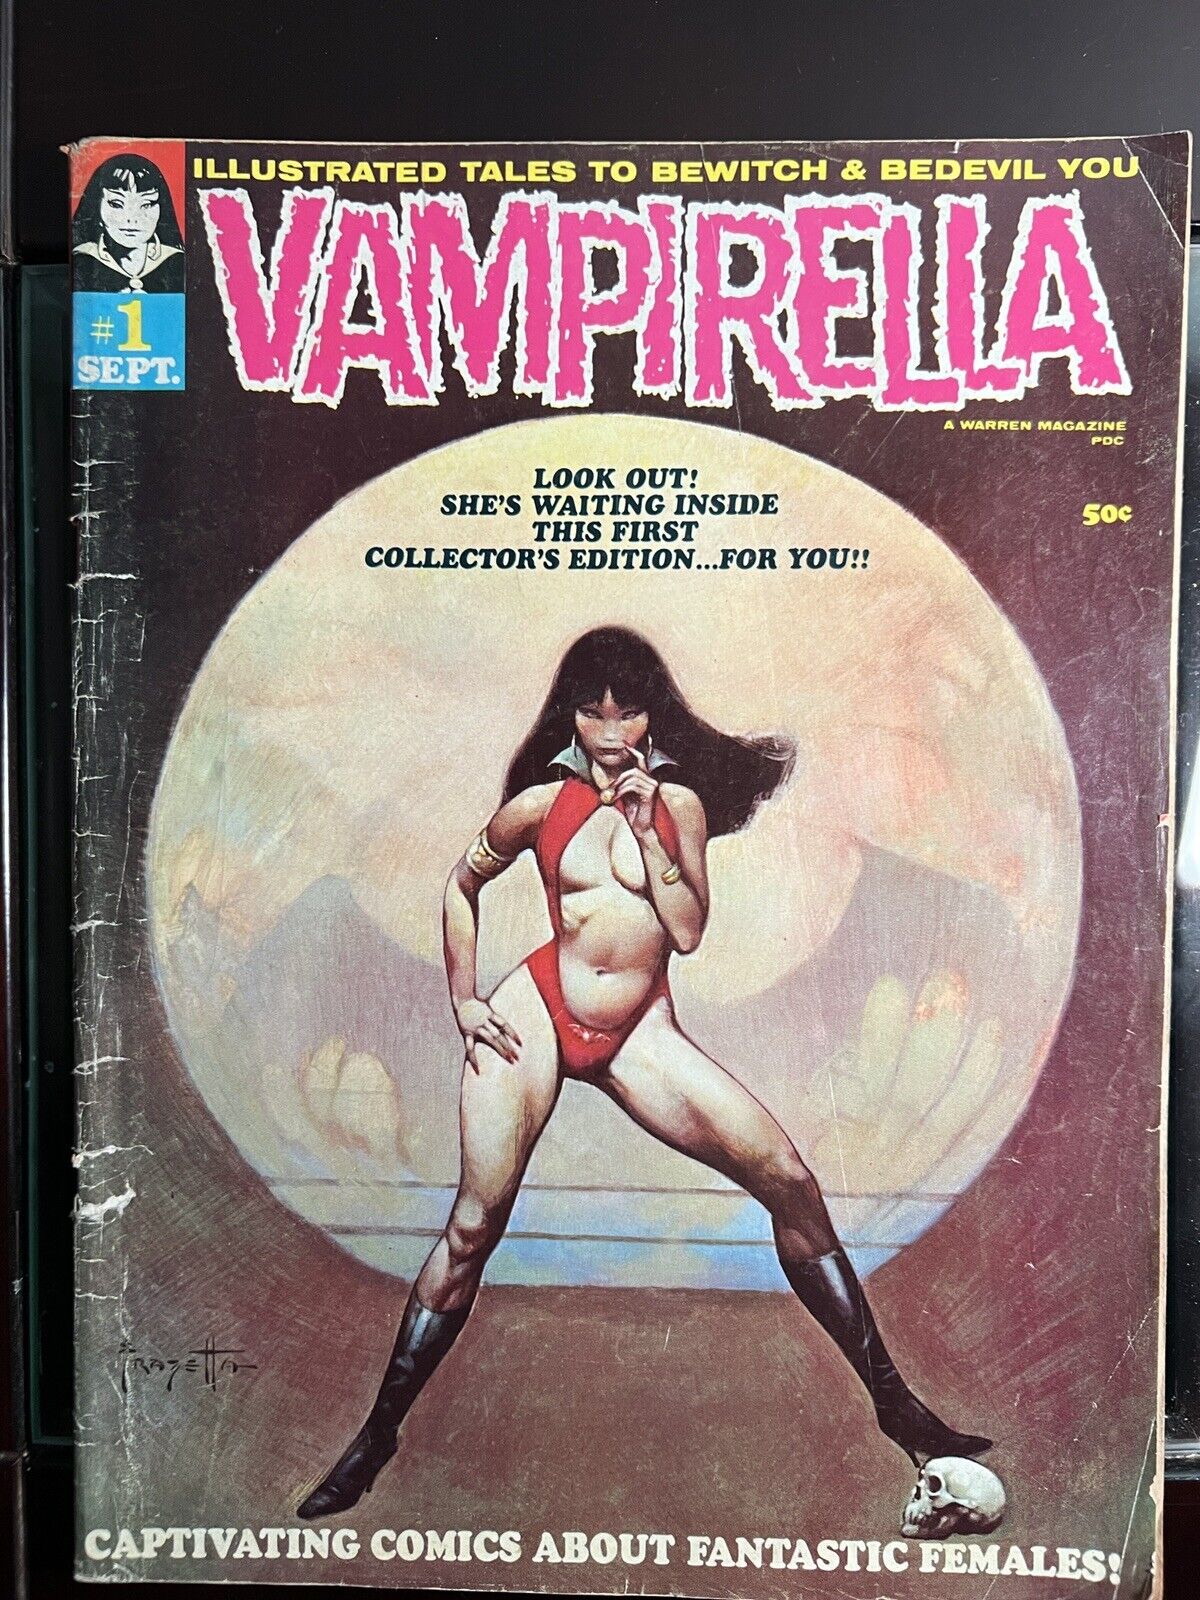 Vampirella Issue #1 1969 First Appearance of Vampirella - Fair to Good Condition